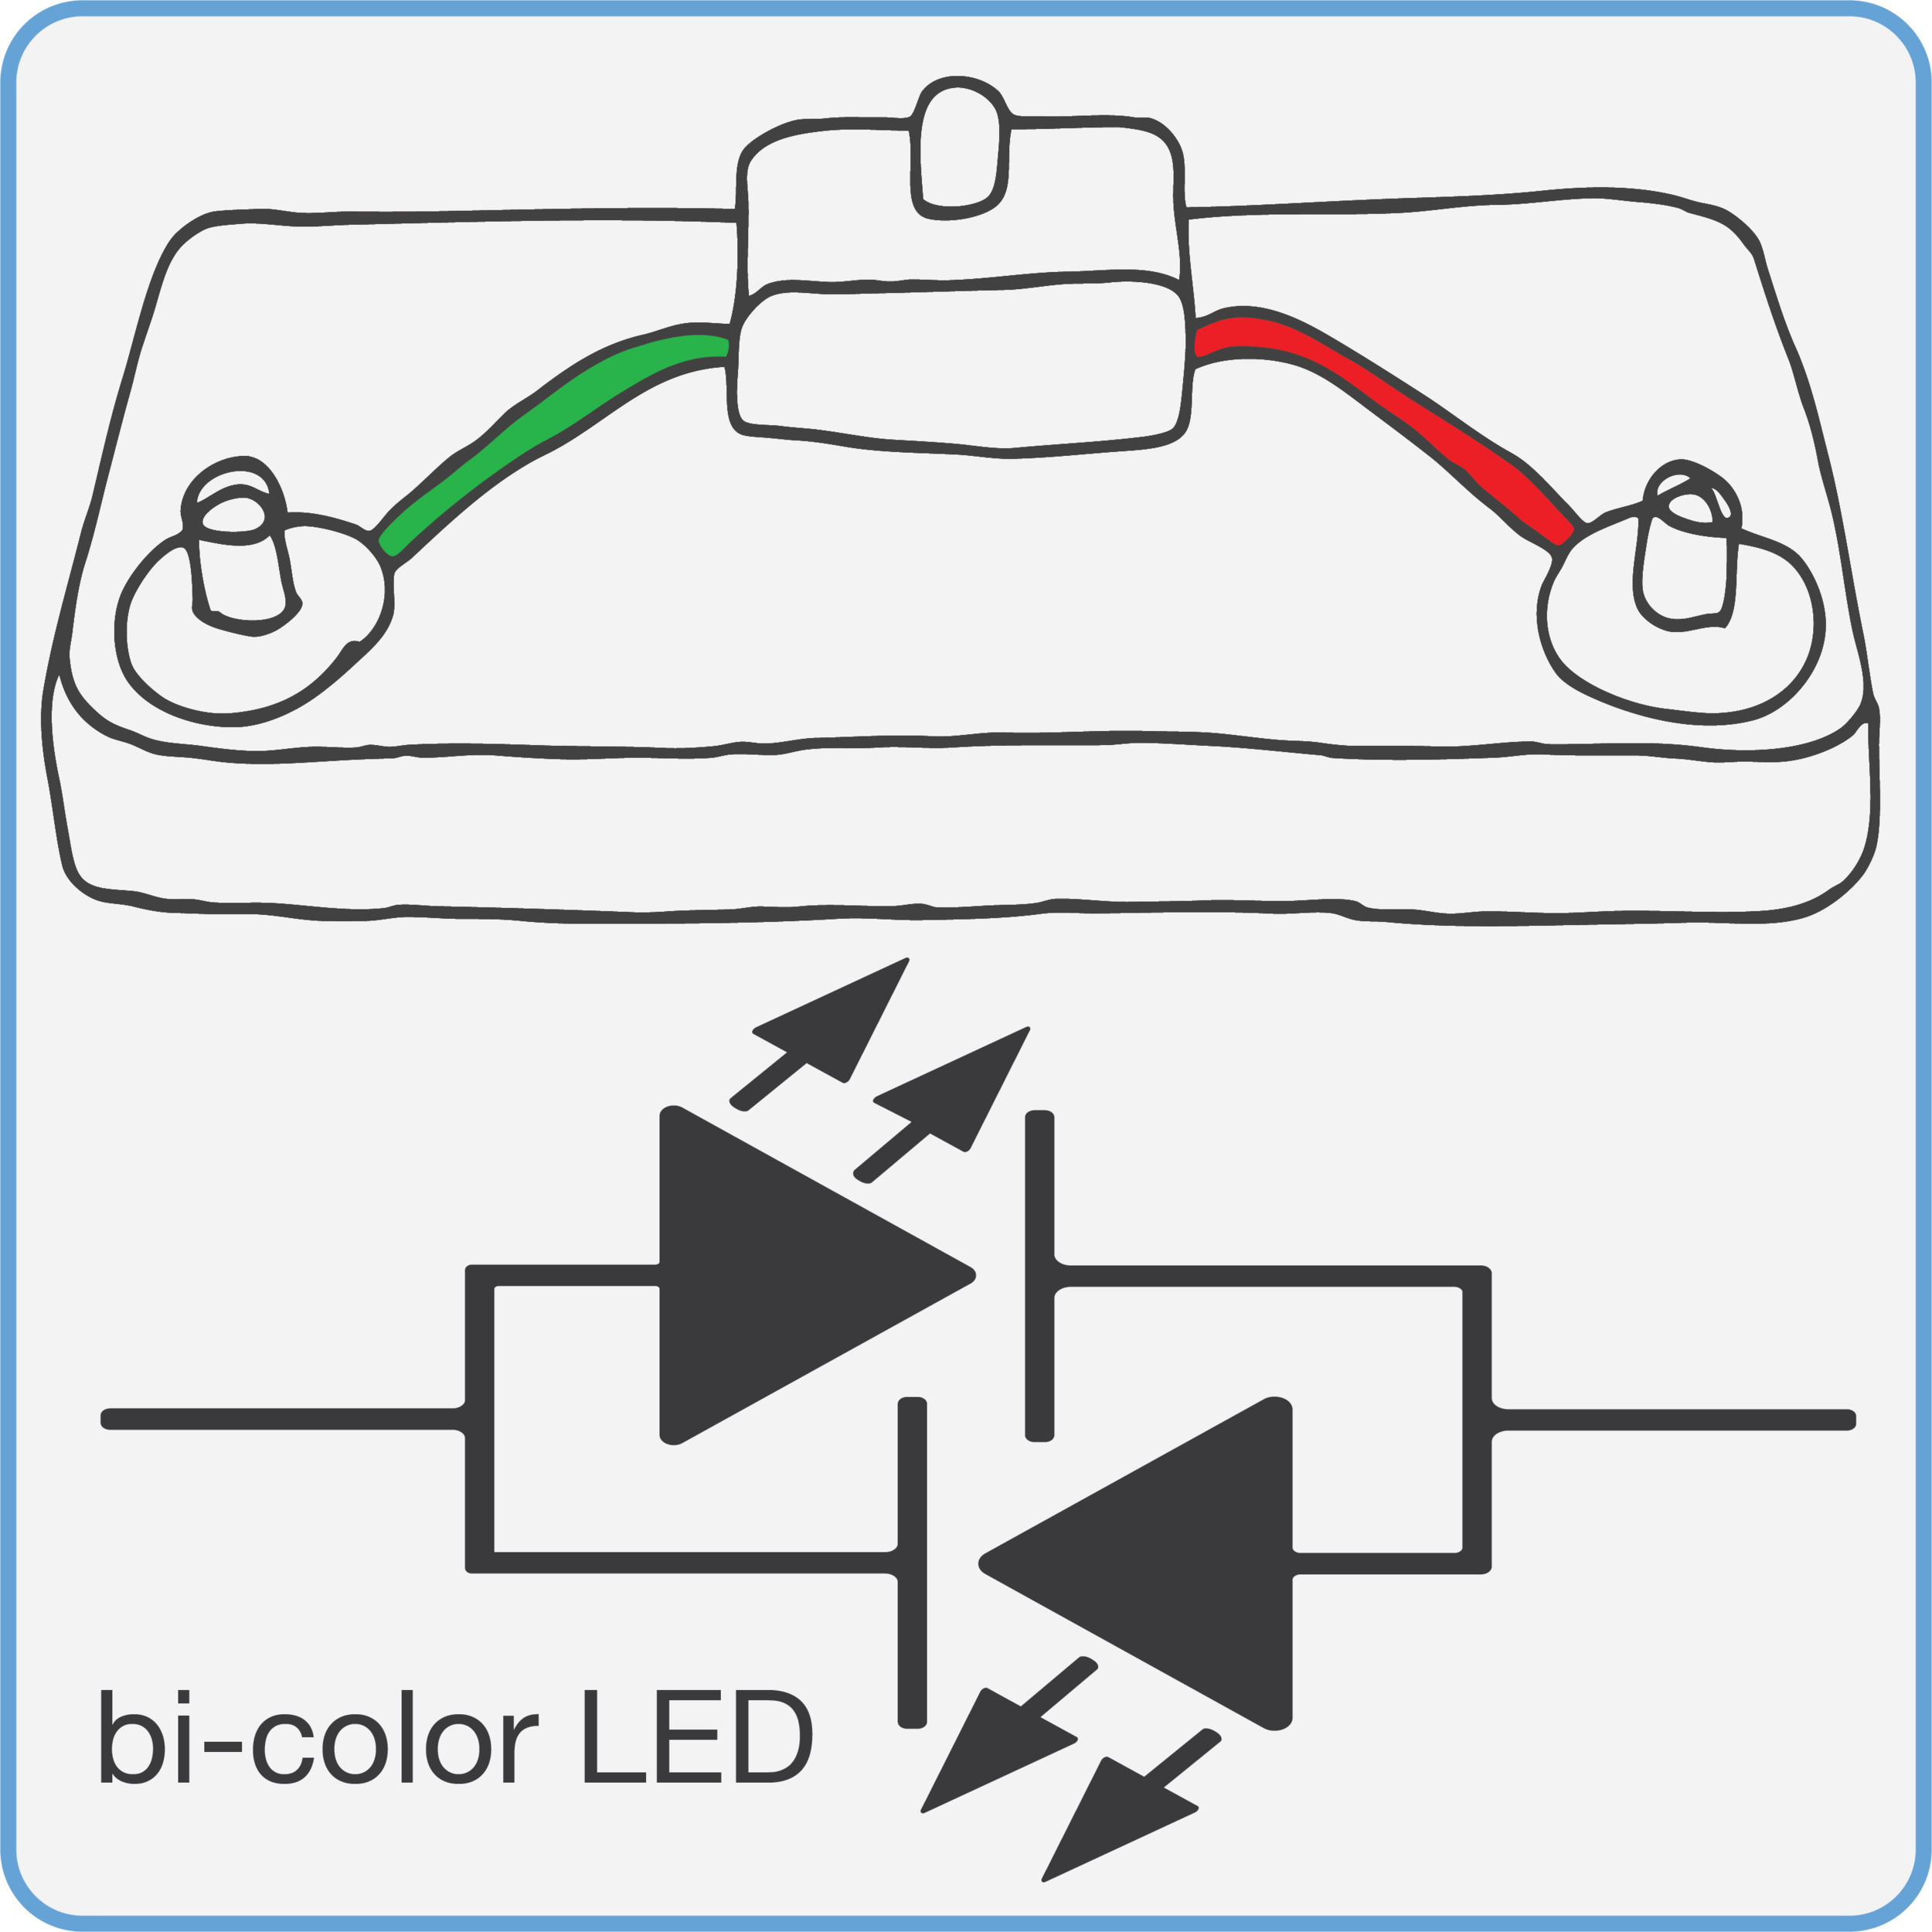 bi-color-schematic.png